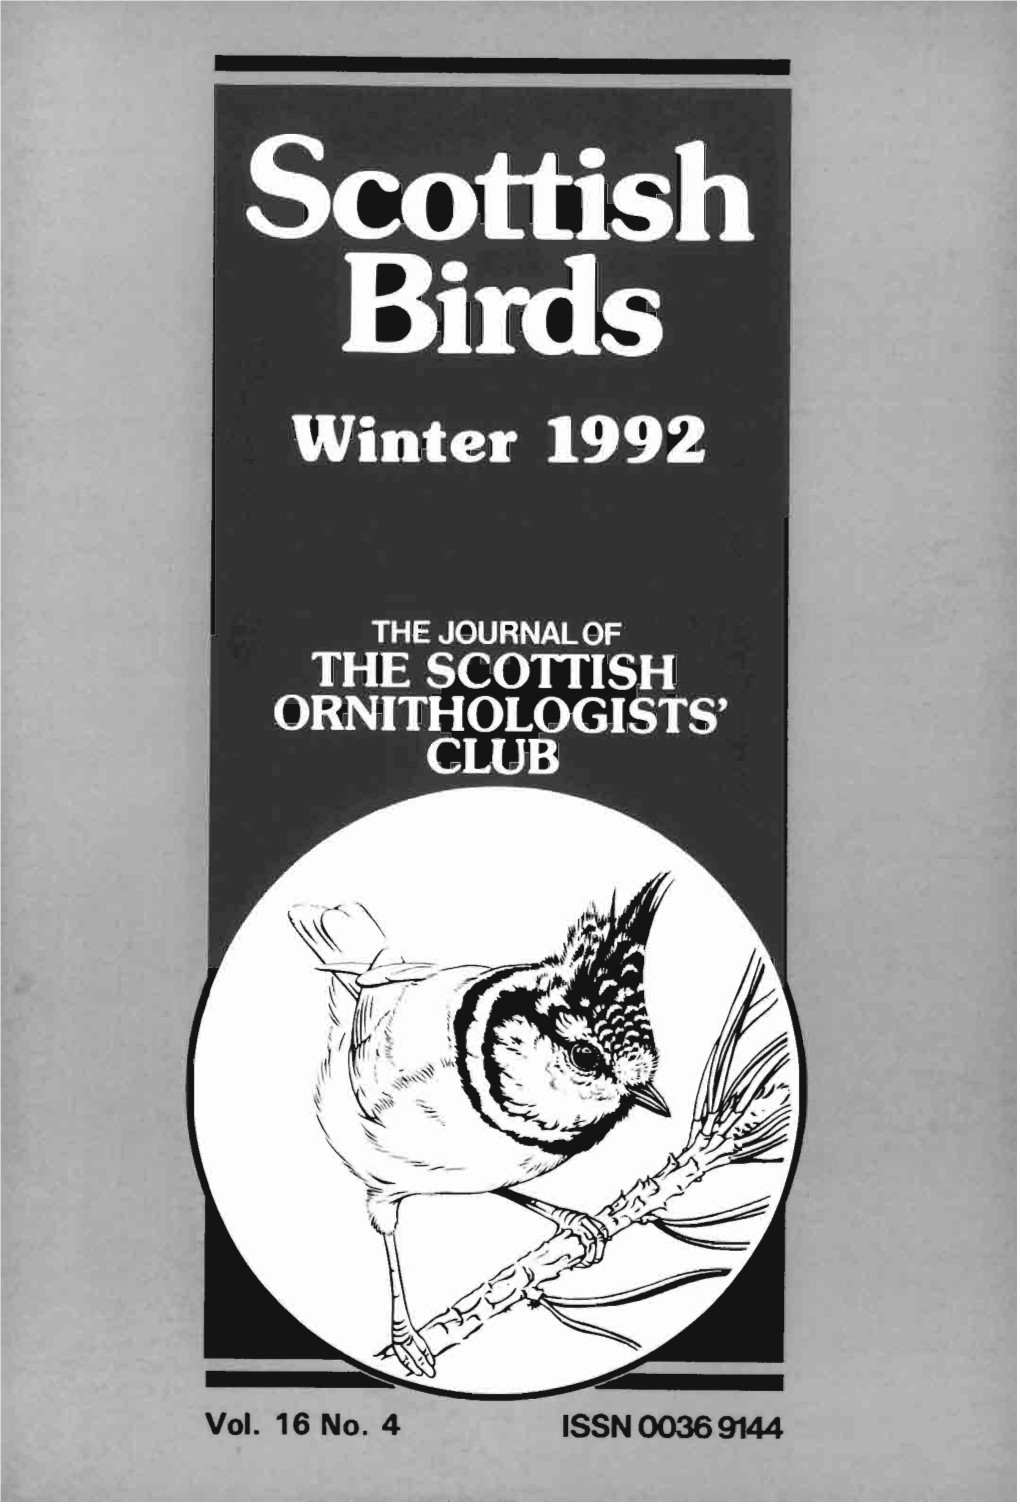 Vol. 16 No. 4 ISSN 0036 9144 Scottish Birds the Journal of the Scottish Ornithologists' Club